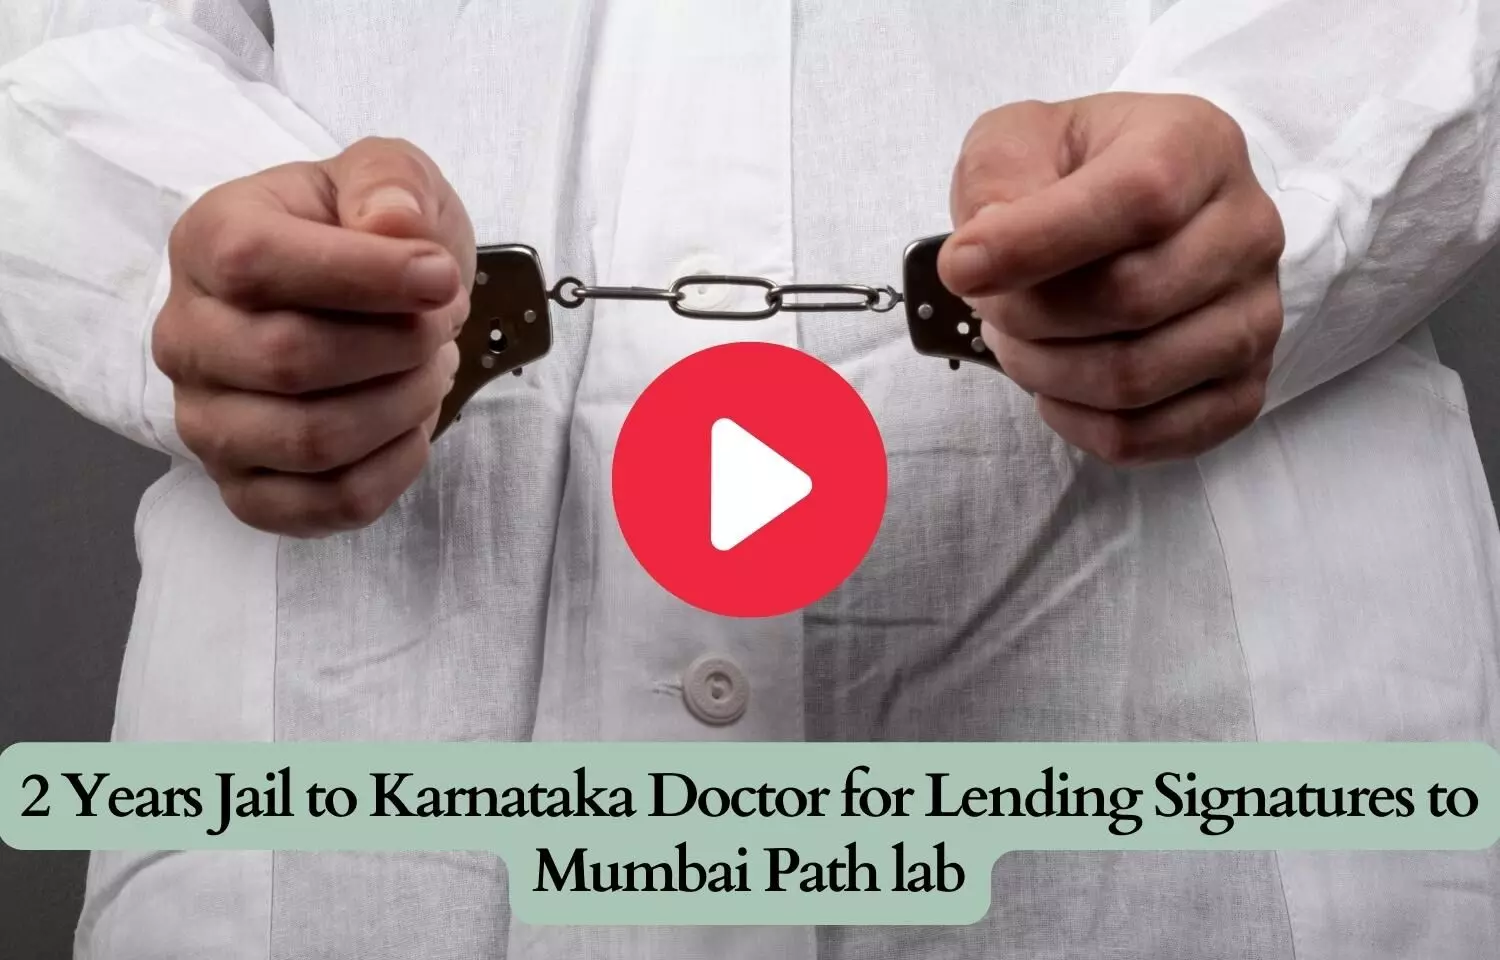 Pathologist sentenced to 2 years jail for lending signatures to Mumbai Path lab